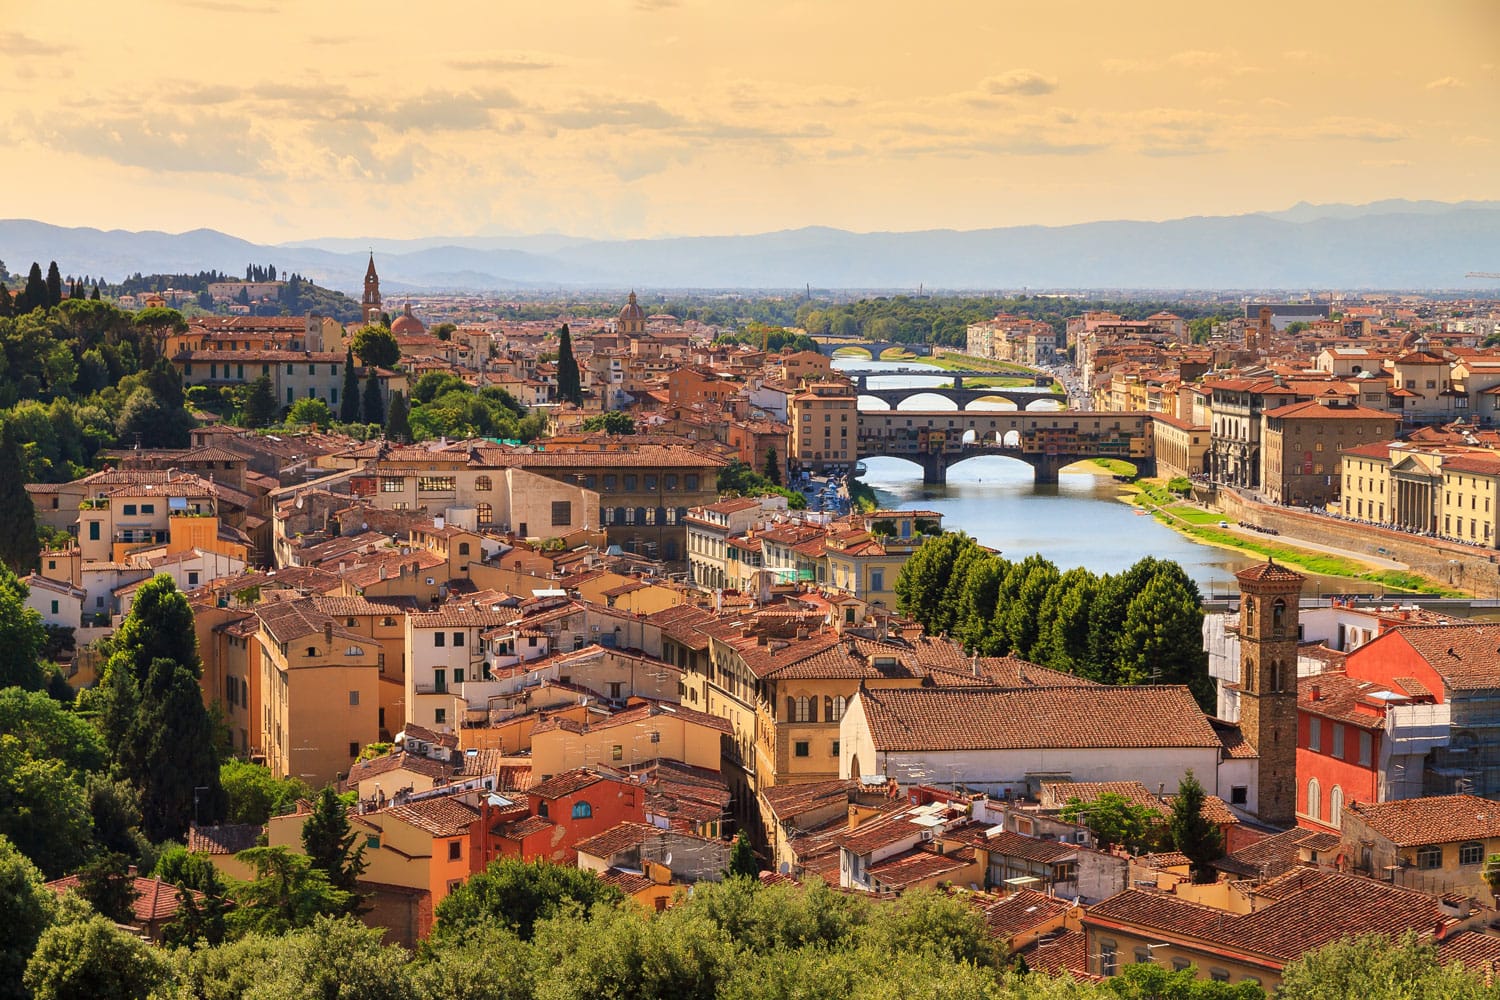 Beautiful cityscape skyline of Firenze (Florence), Italy